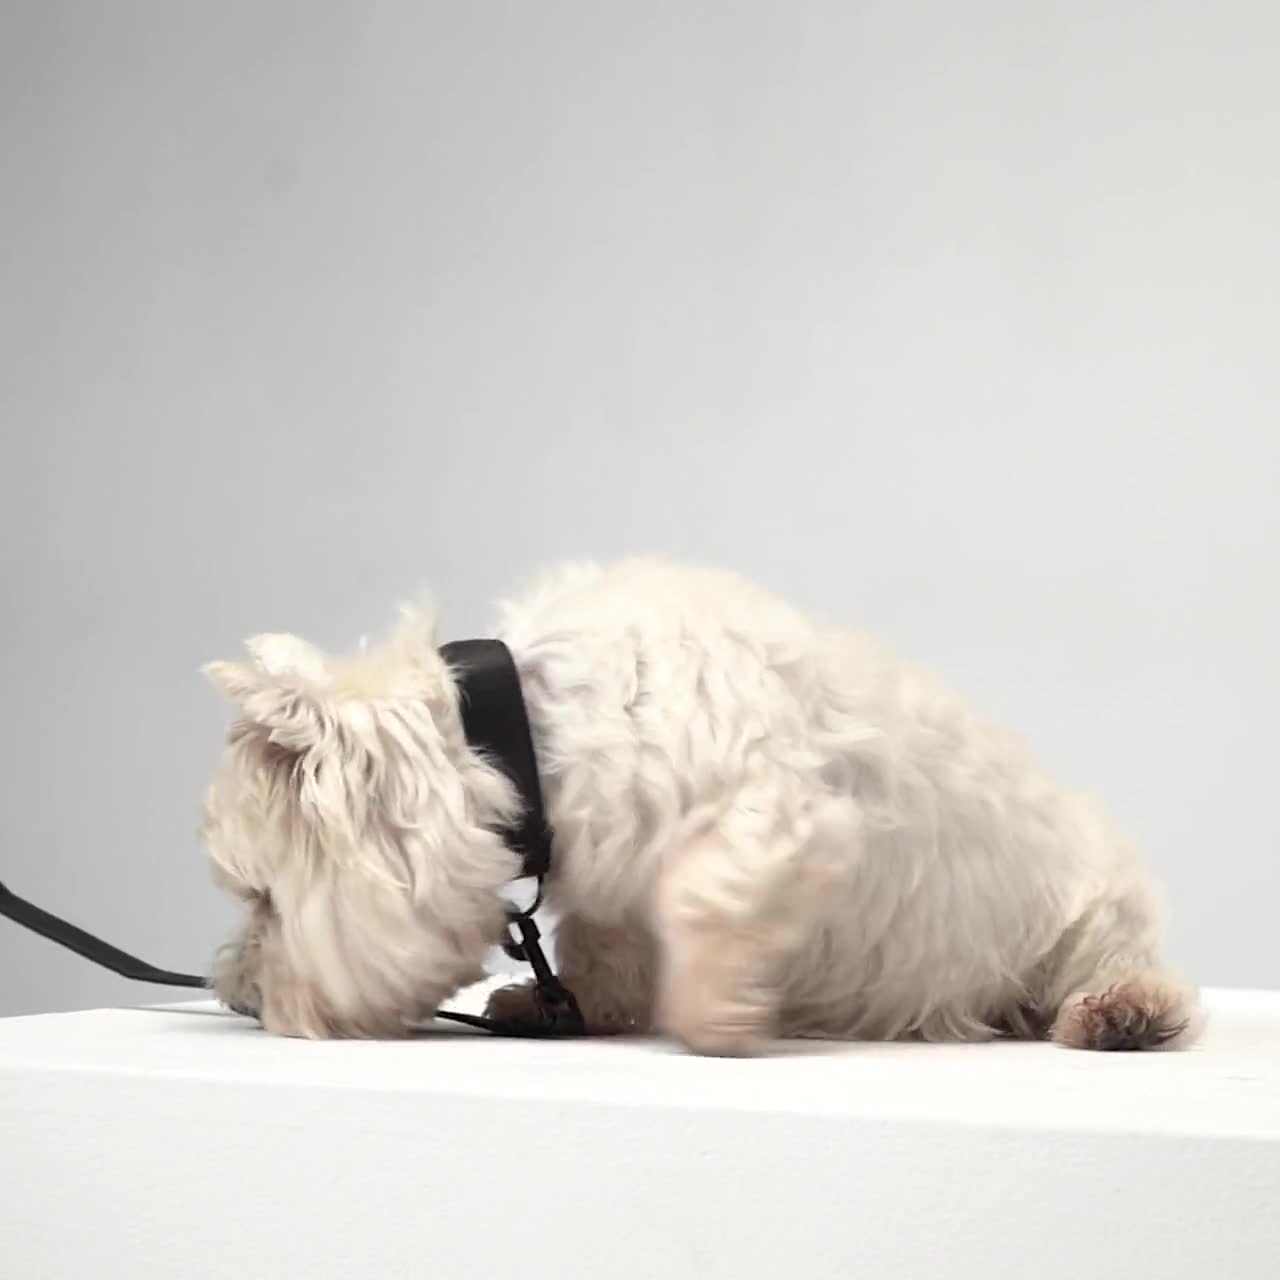 Nine Twenty Eight™ Faux Leather Apple AirTag Small Dog Collar - Cult of Mac  Store